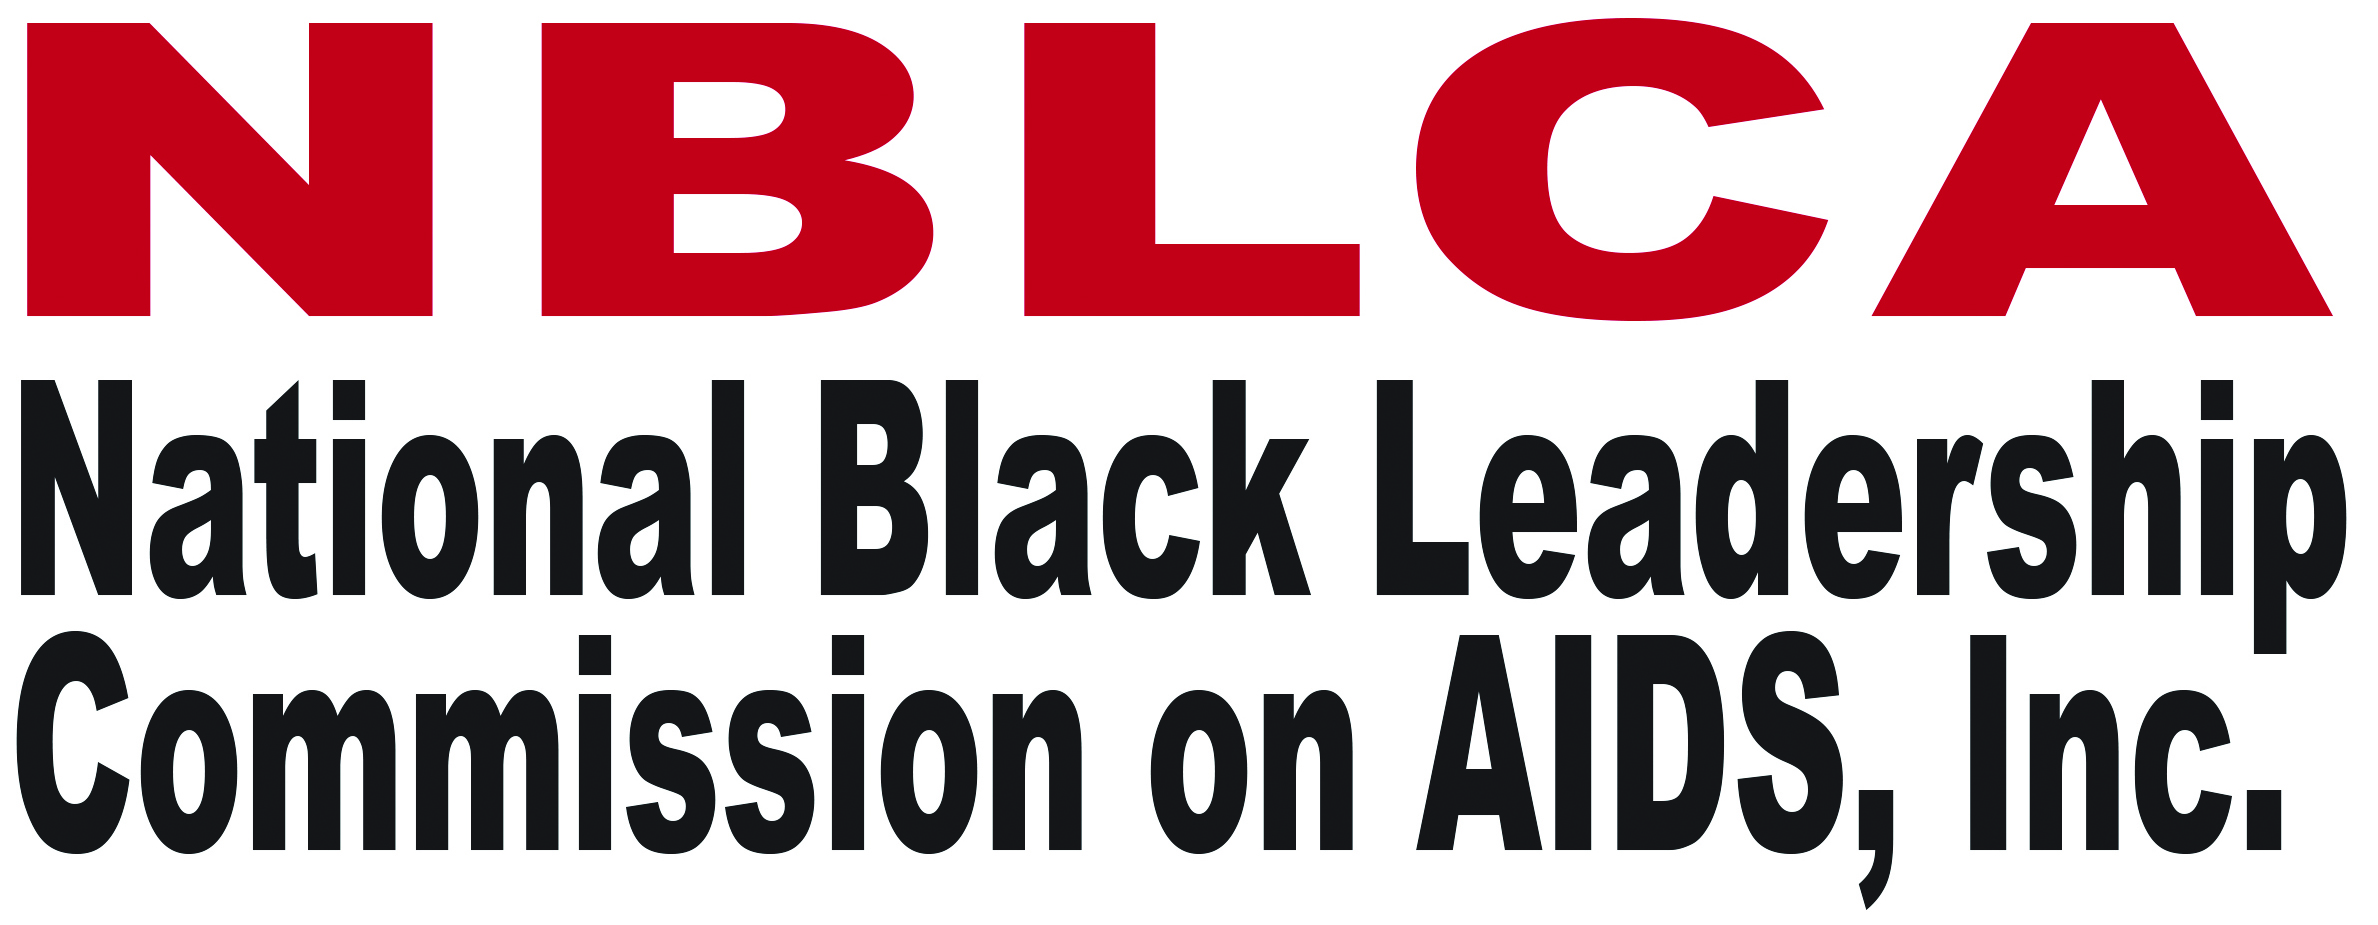 National Black Leadership Commission on AIDS